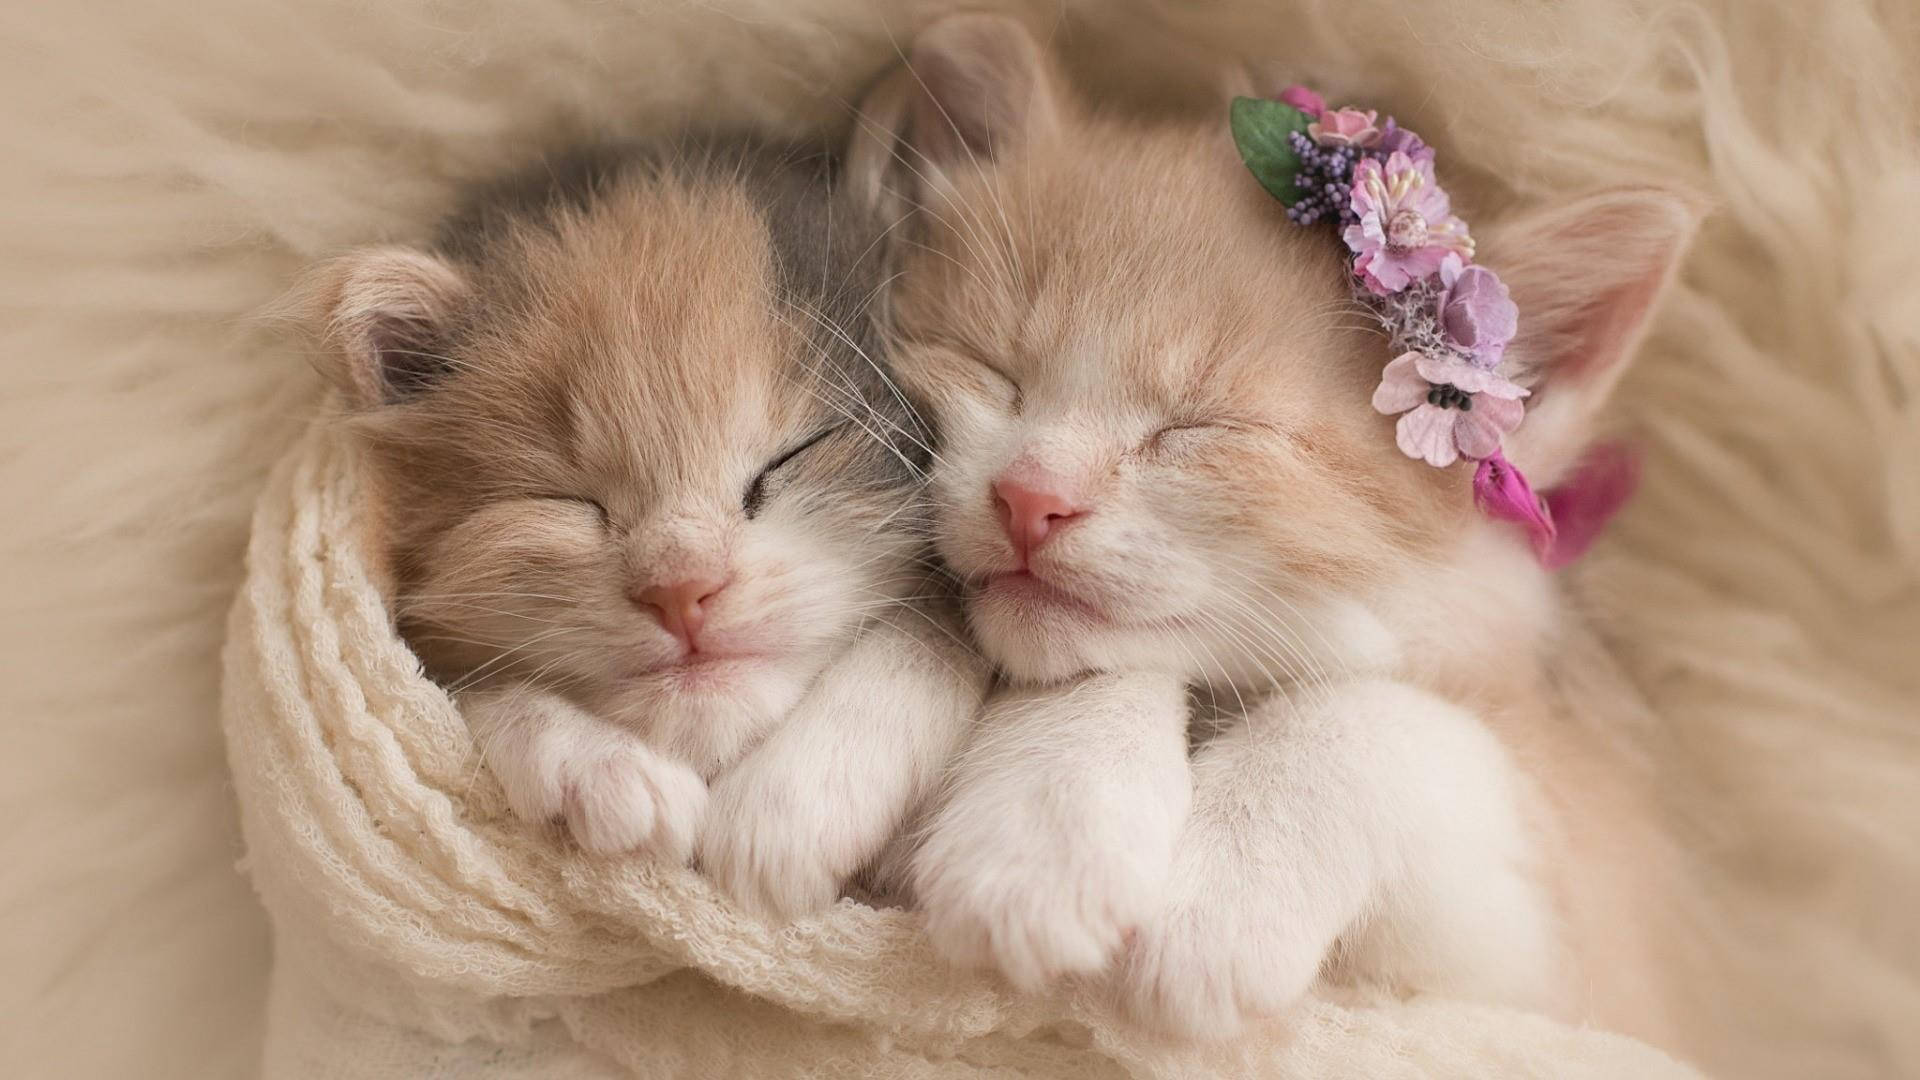 Baby Cats Cuddling Image